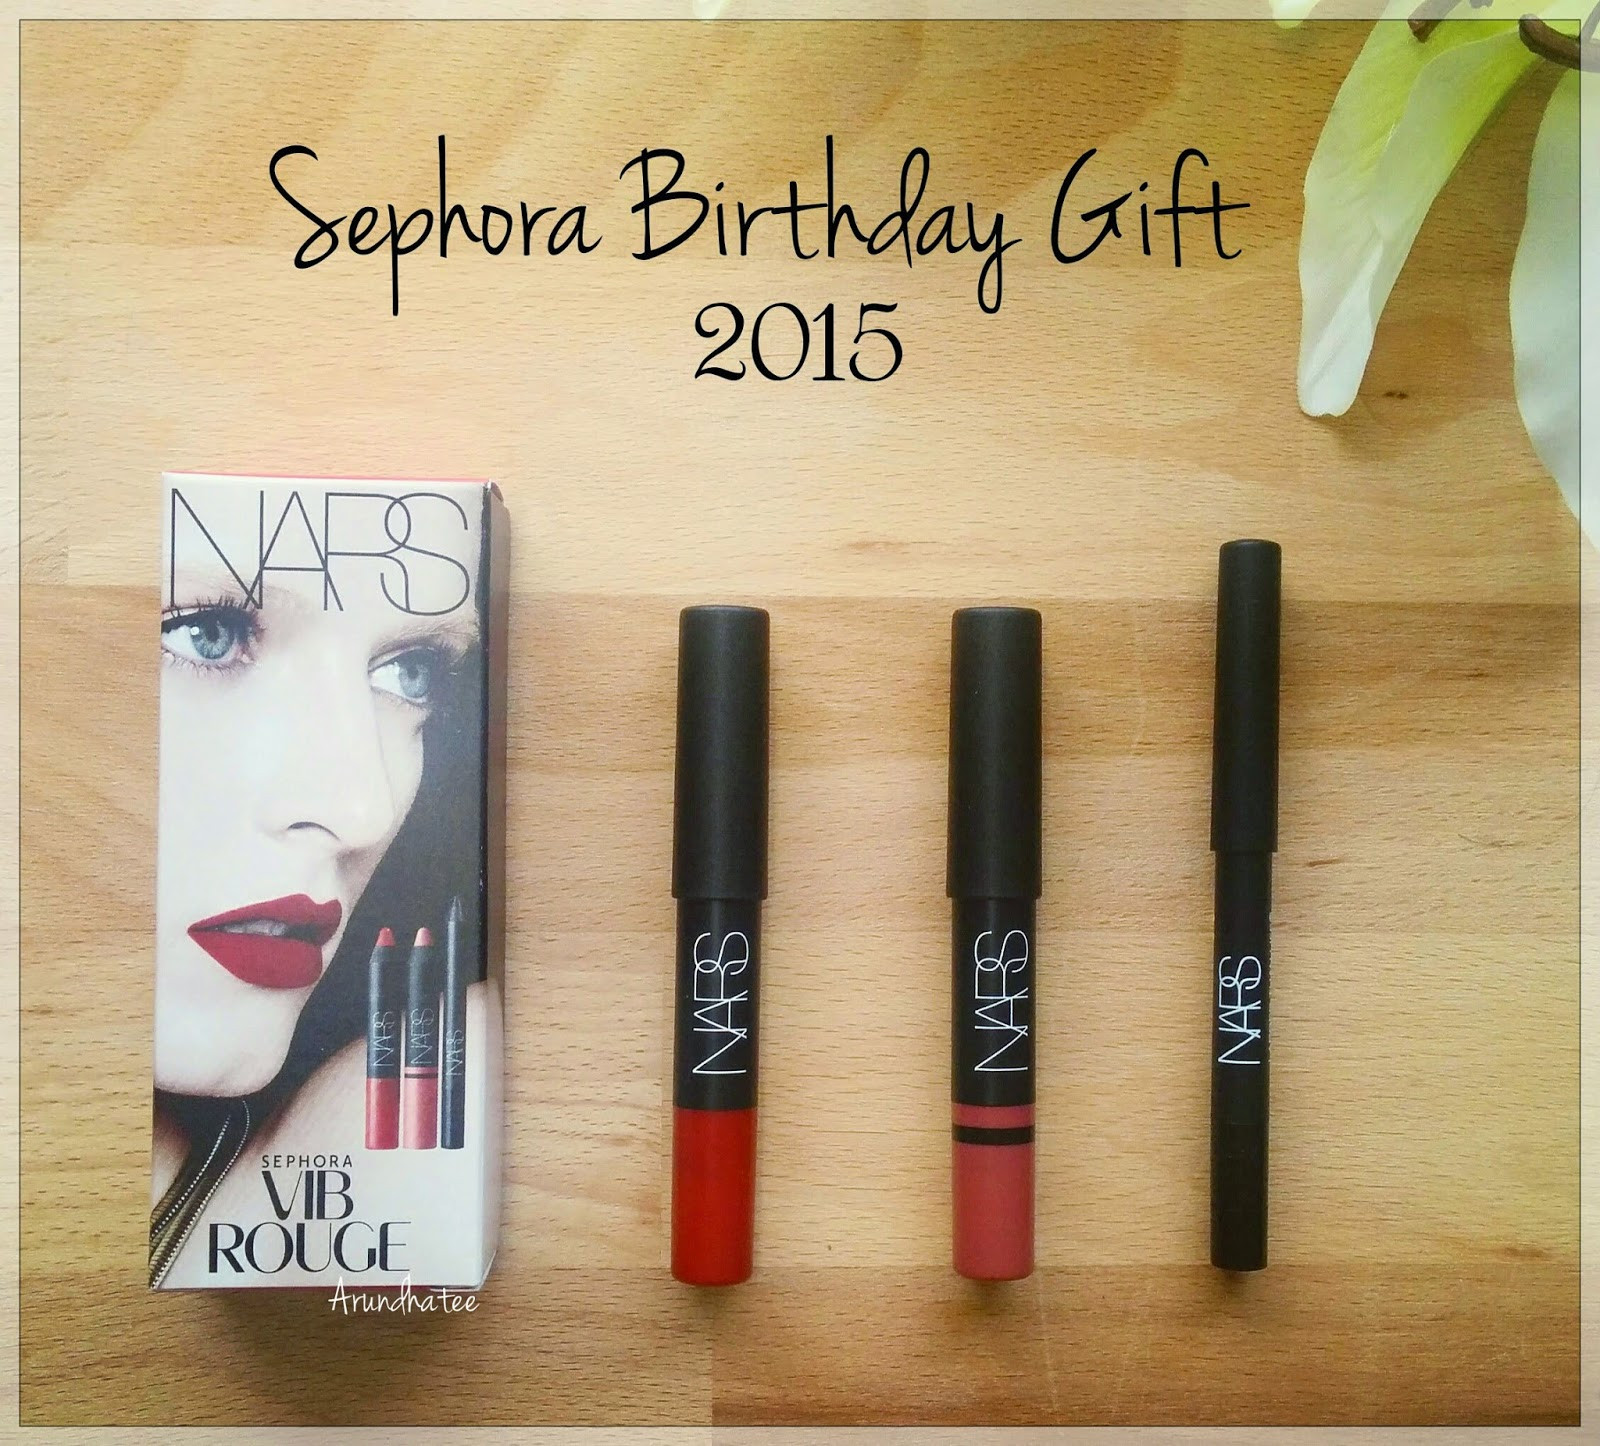 Sephora Birthday Gift Online
 Discovering me Sephora wishes "Happy Birthday"